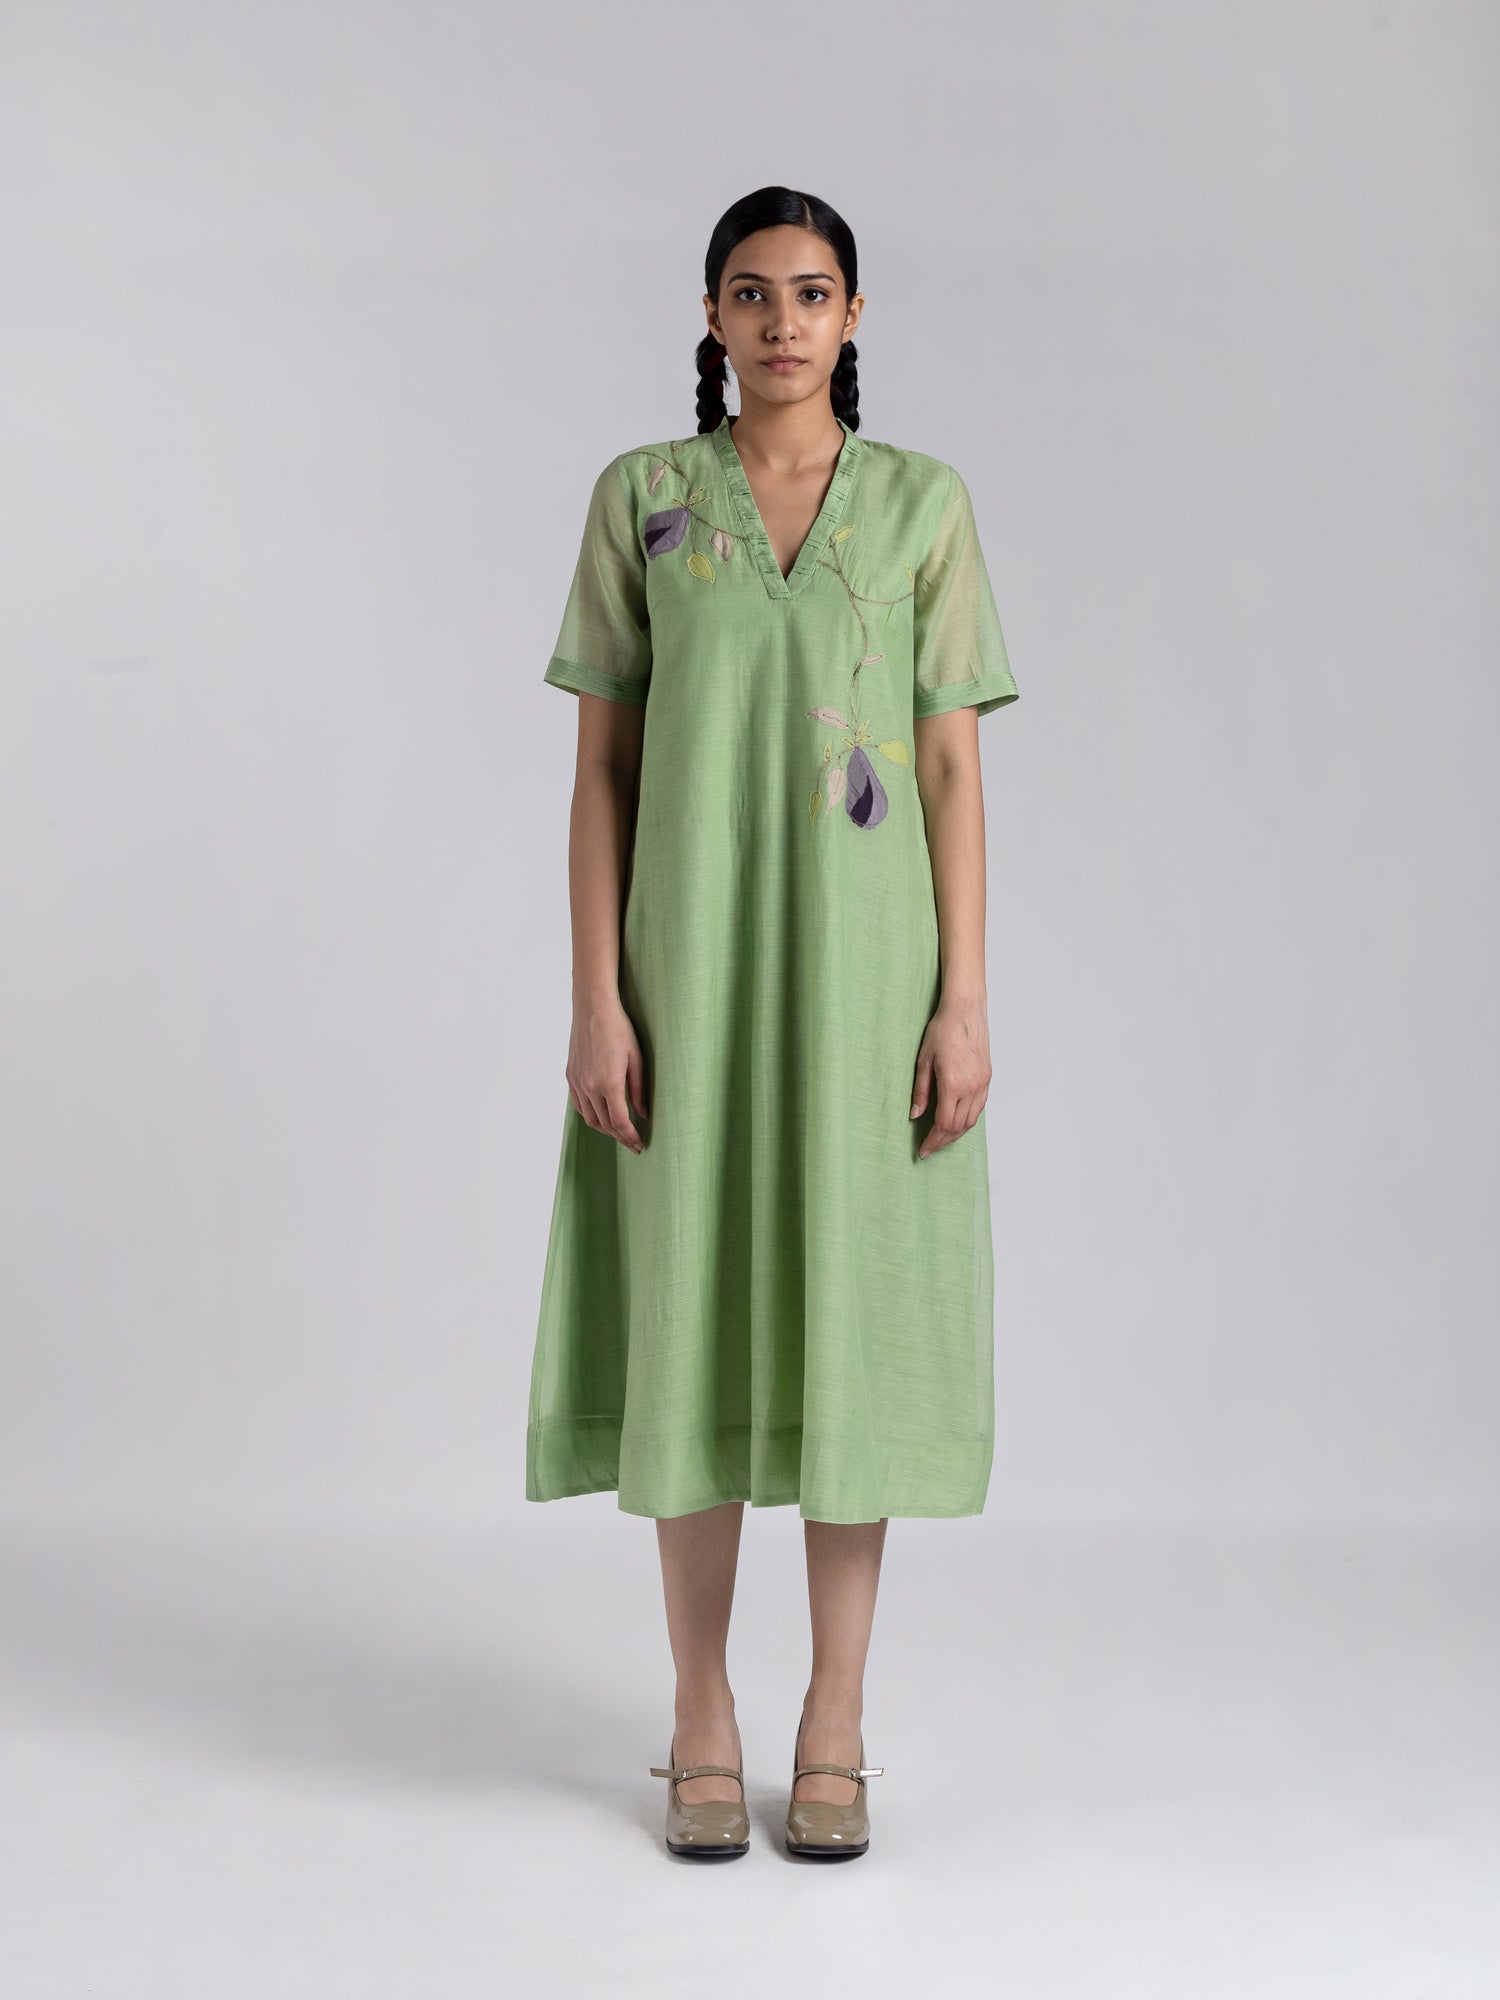 Ripe Dress - CiceroniDressesShades of India